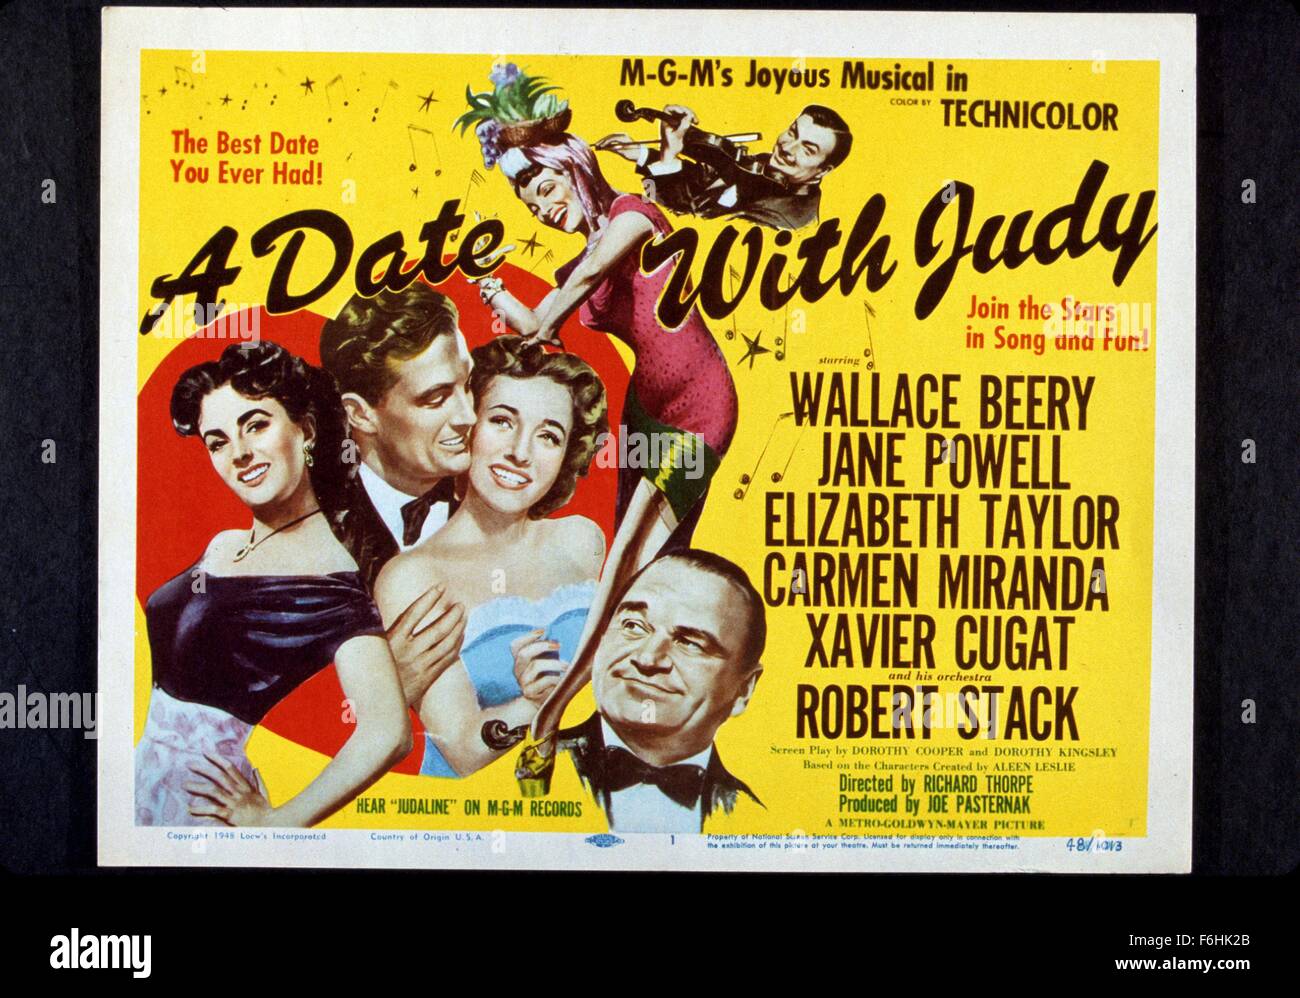 1948, Film Title: DATE WITH JUDY, Director: RICHARD THORPE, Studio: MGM, Pictured: ENSEMBLE, CARMEN MIRANDA, JANE POWELL, ROBERT STACK, ELIZABETH TAYLOR, RICHARD THORPE, POSTER ART. (Credit Image: SNAP) Stock Photo